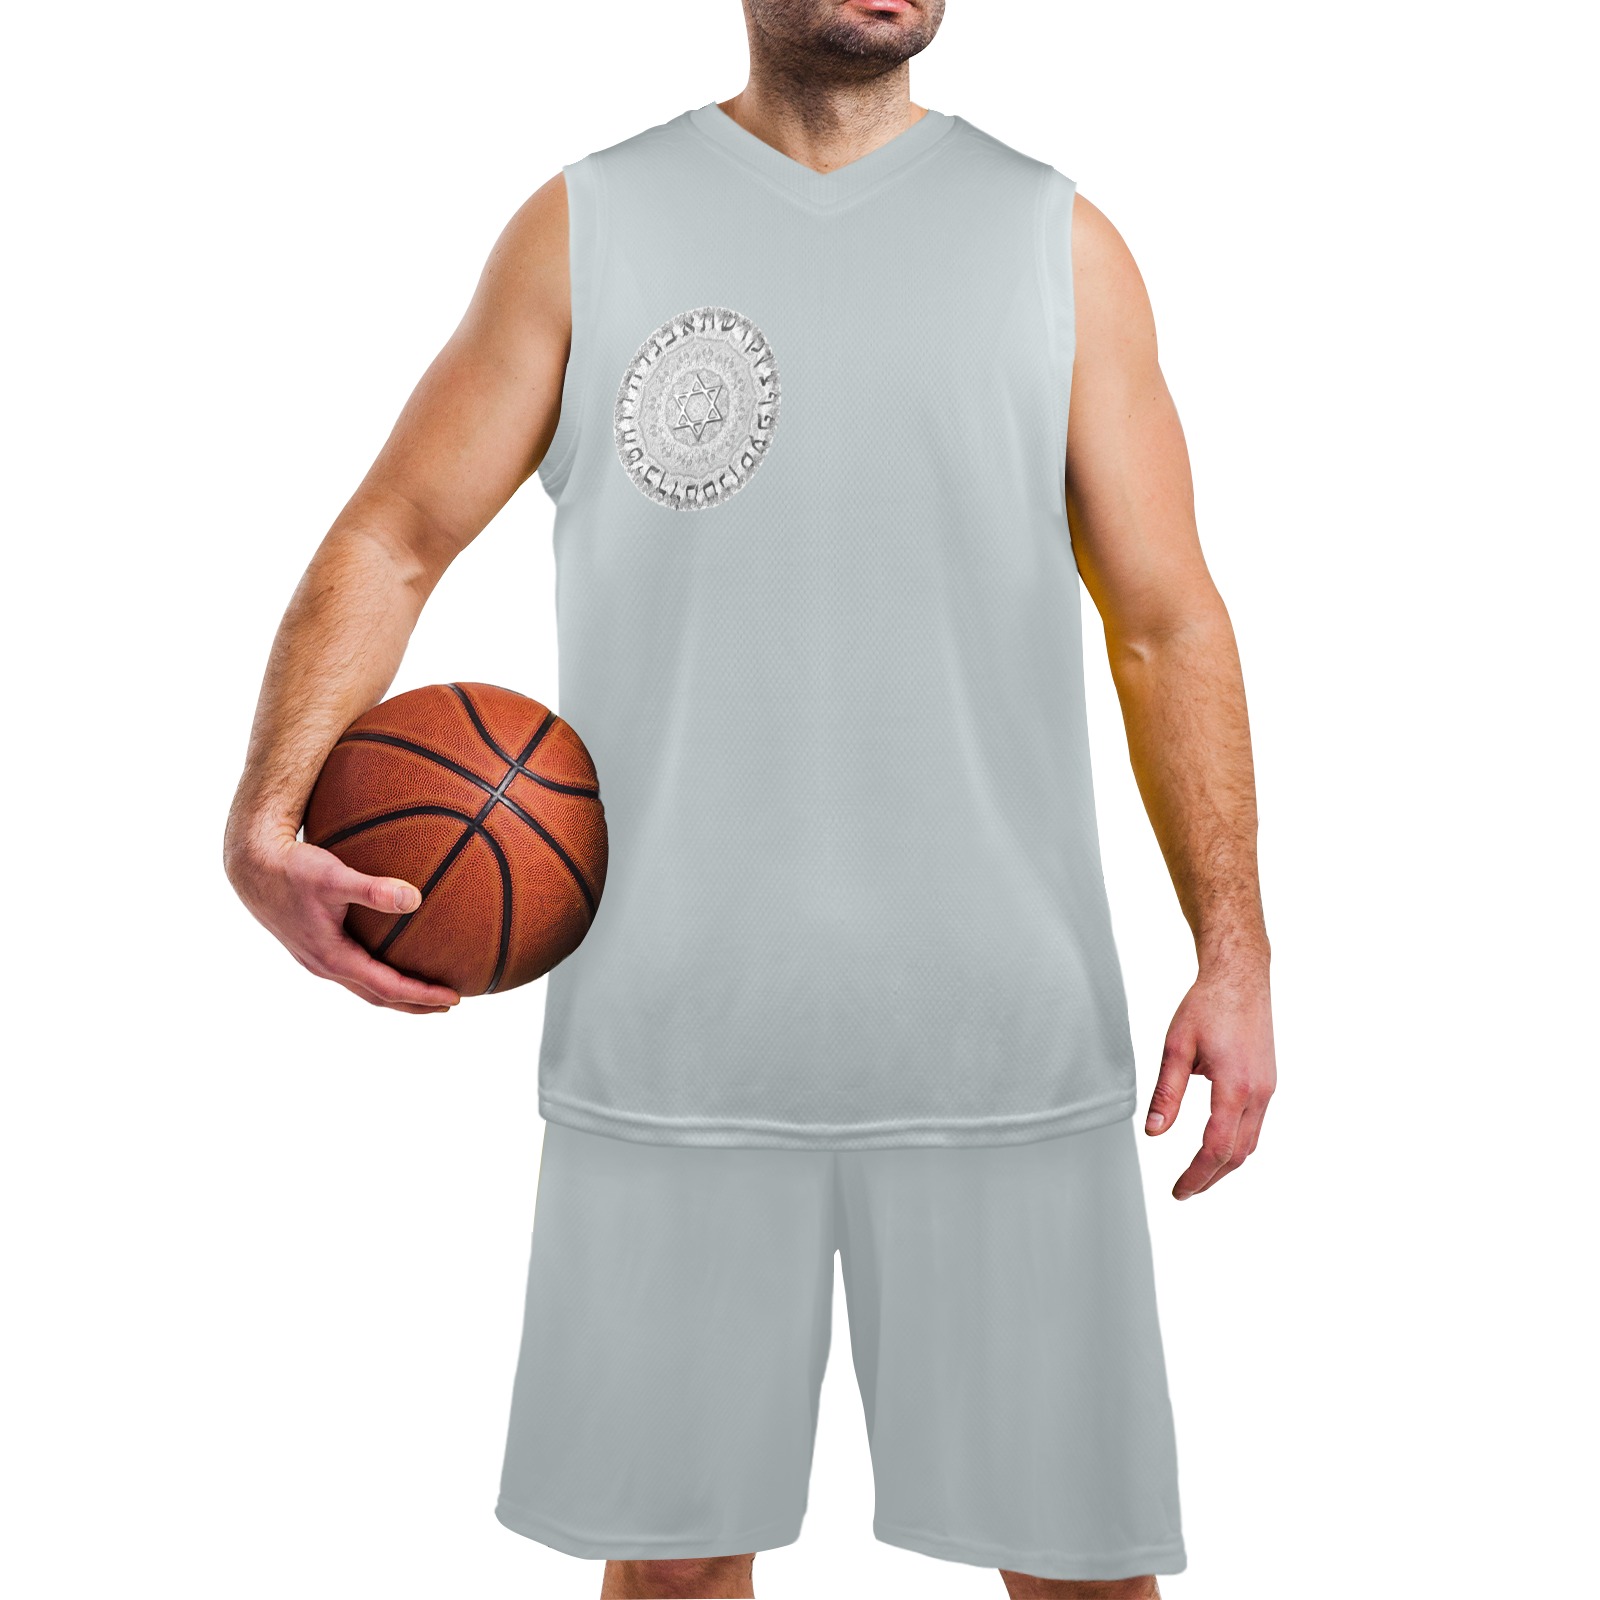 20 Men's V-Neck Basketball Uniform